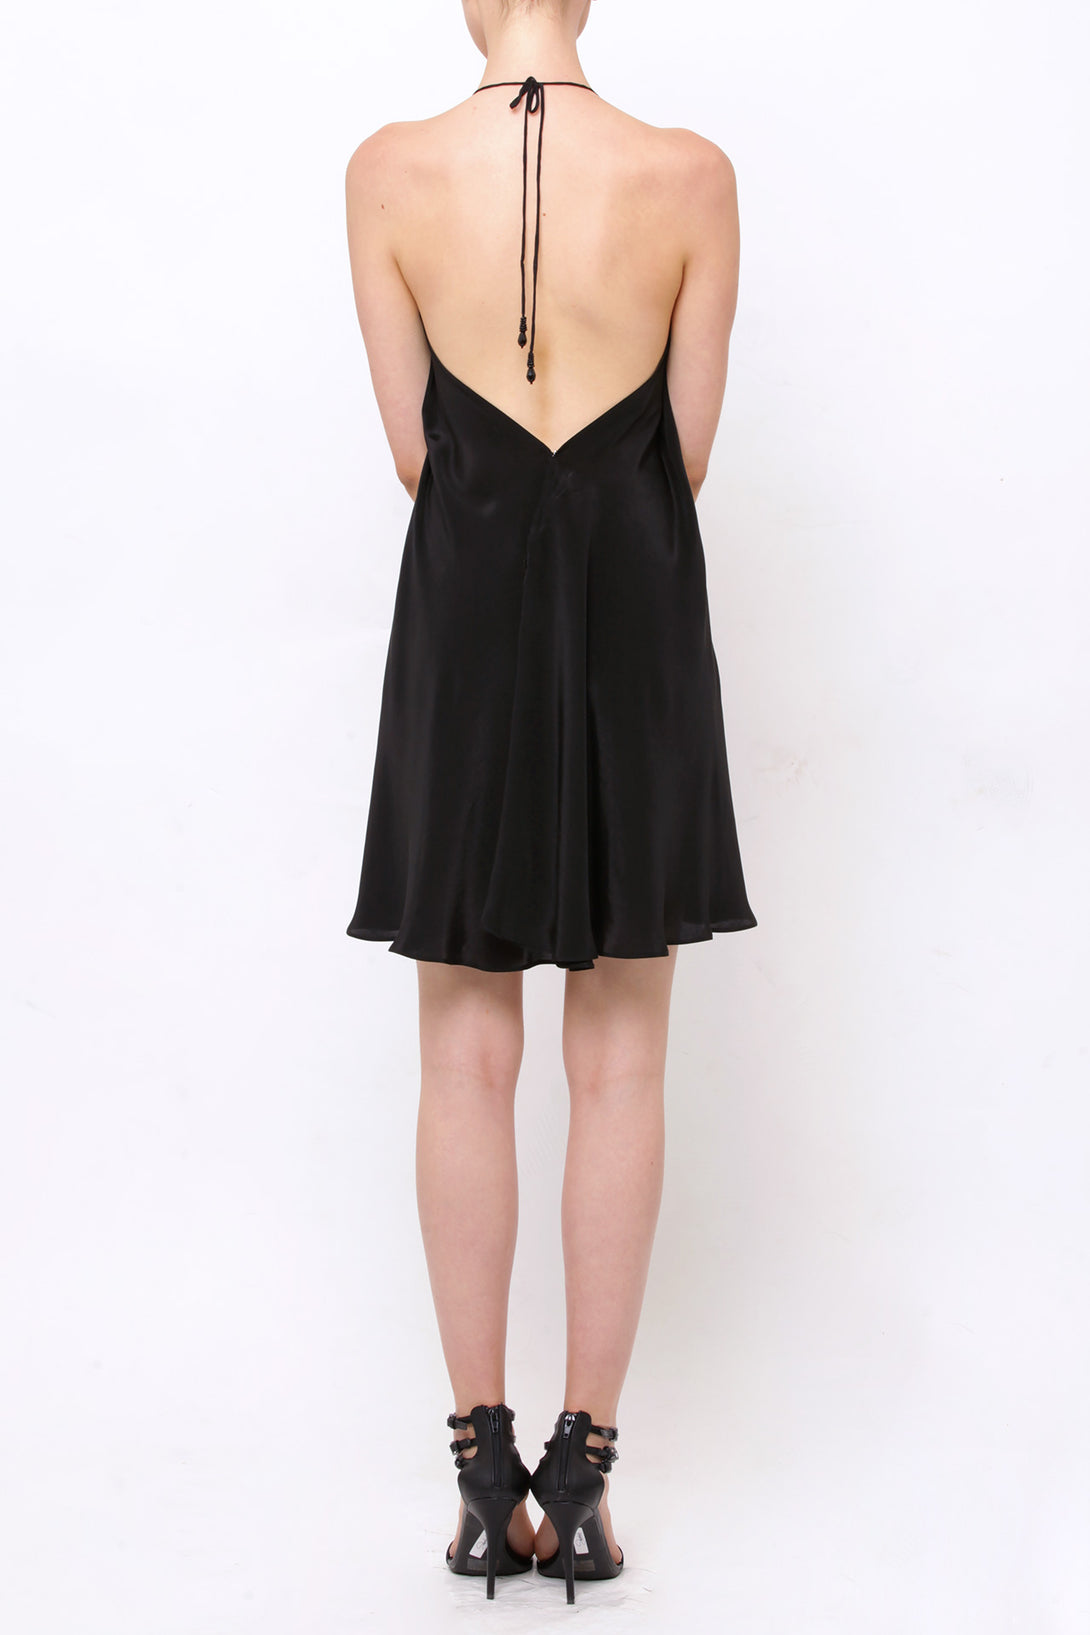  black bodycon mini dress, Shahida Parides, sexy mini dresses for women, sleeveless mini dress,